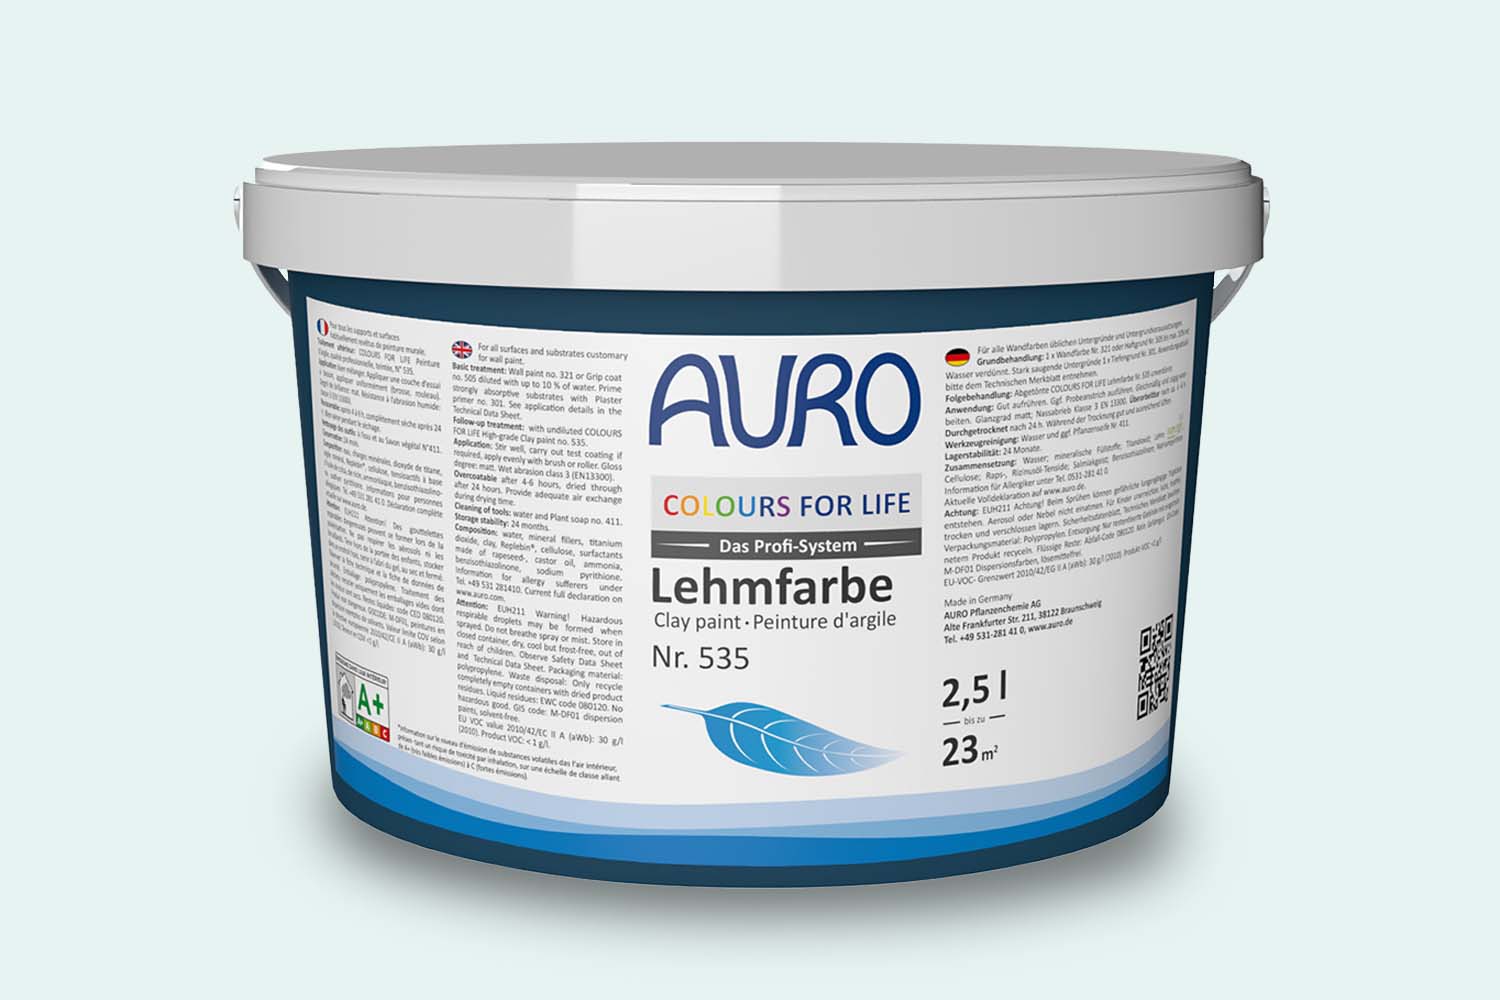 Auro Profi-Lehmfarbe Nr. 535 light aqua Colours For Life